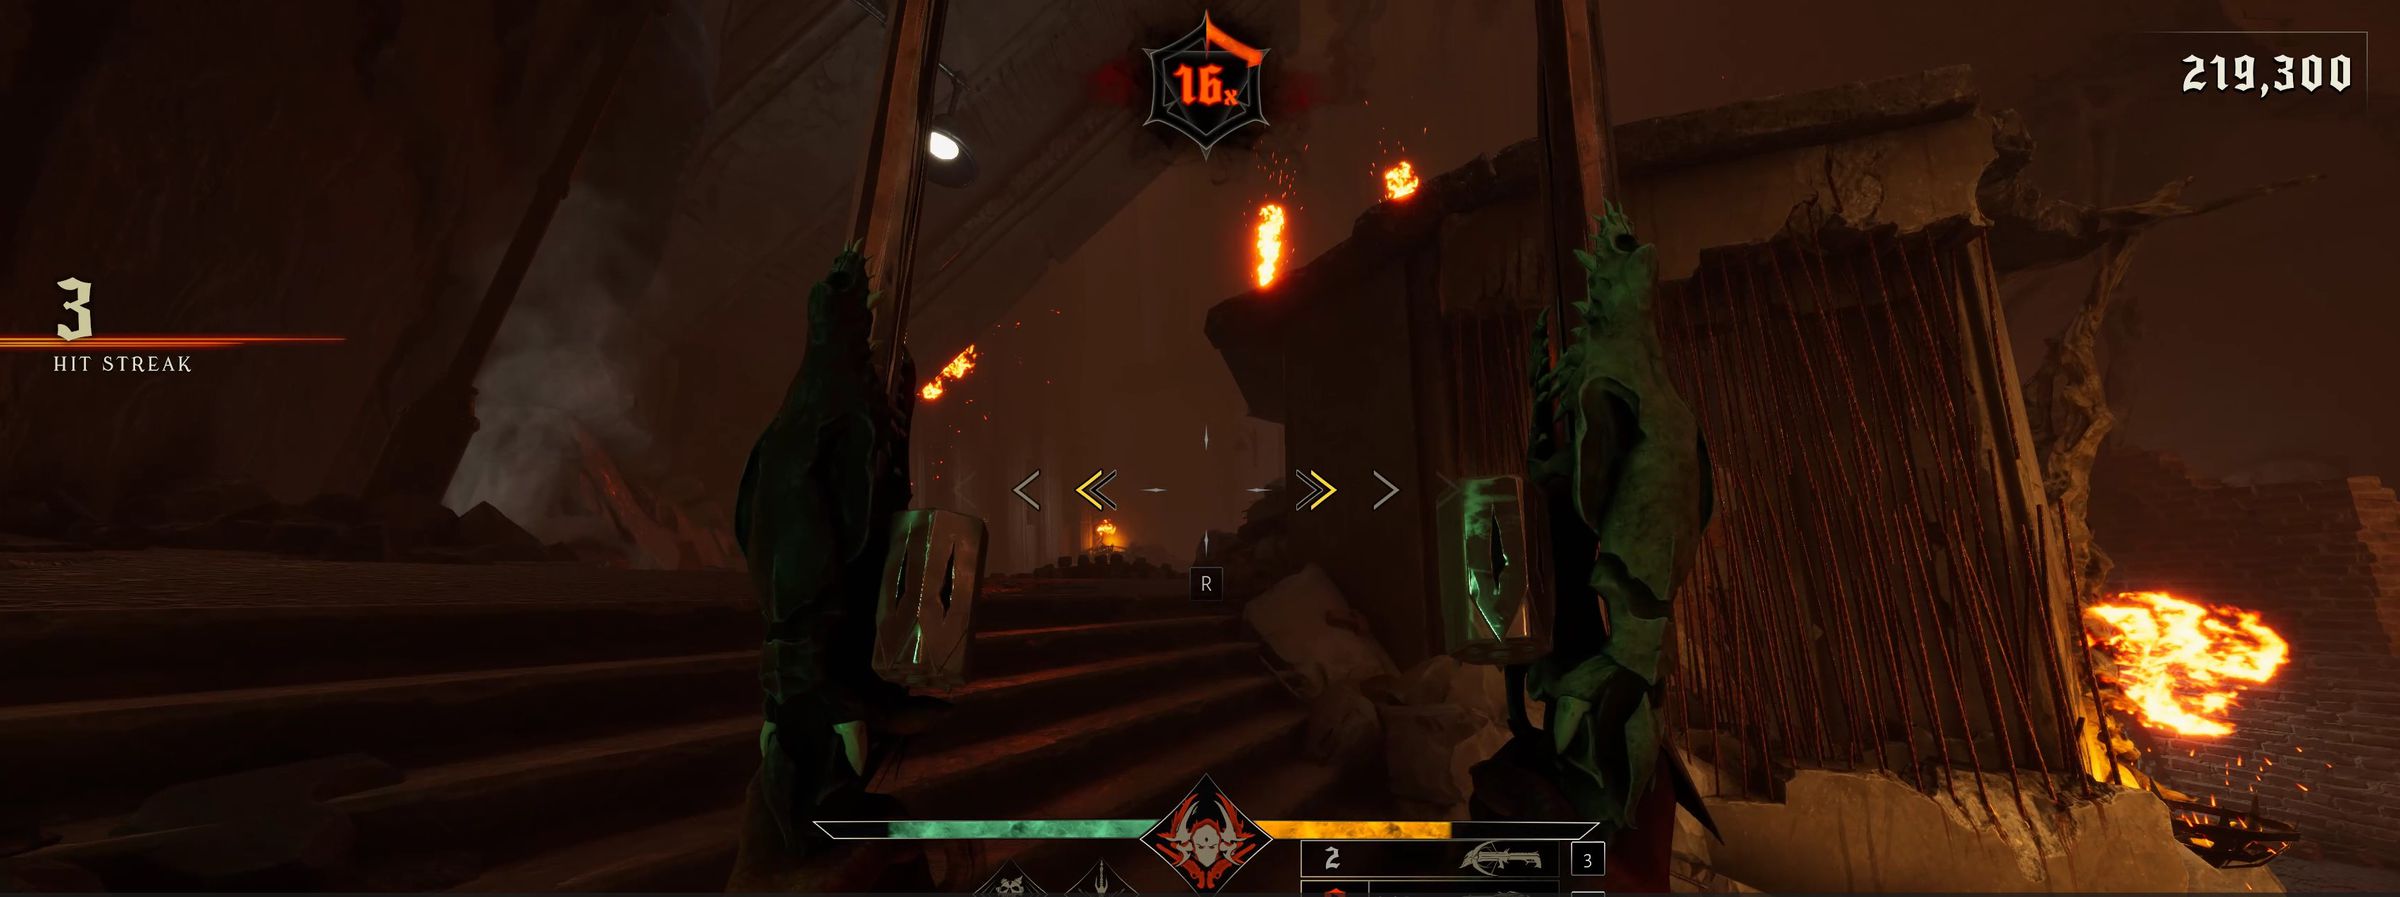 A gameplay screenshot of Metal: Hellsinger